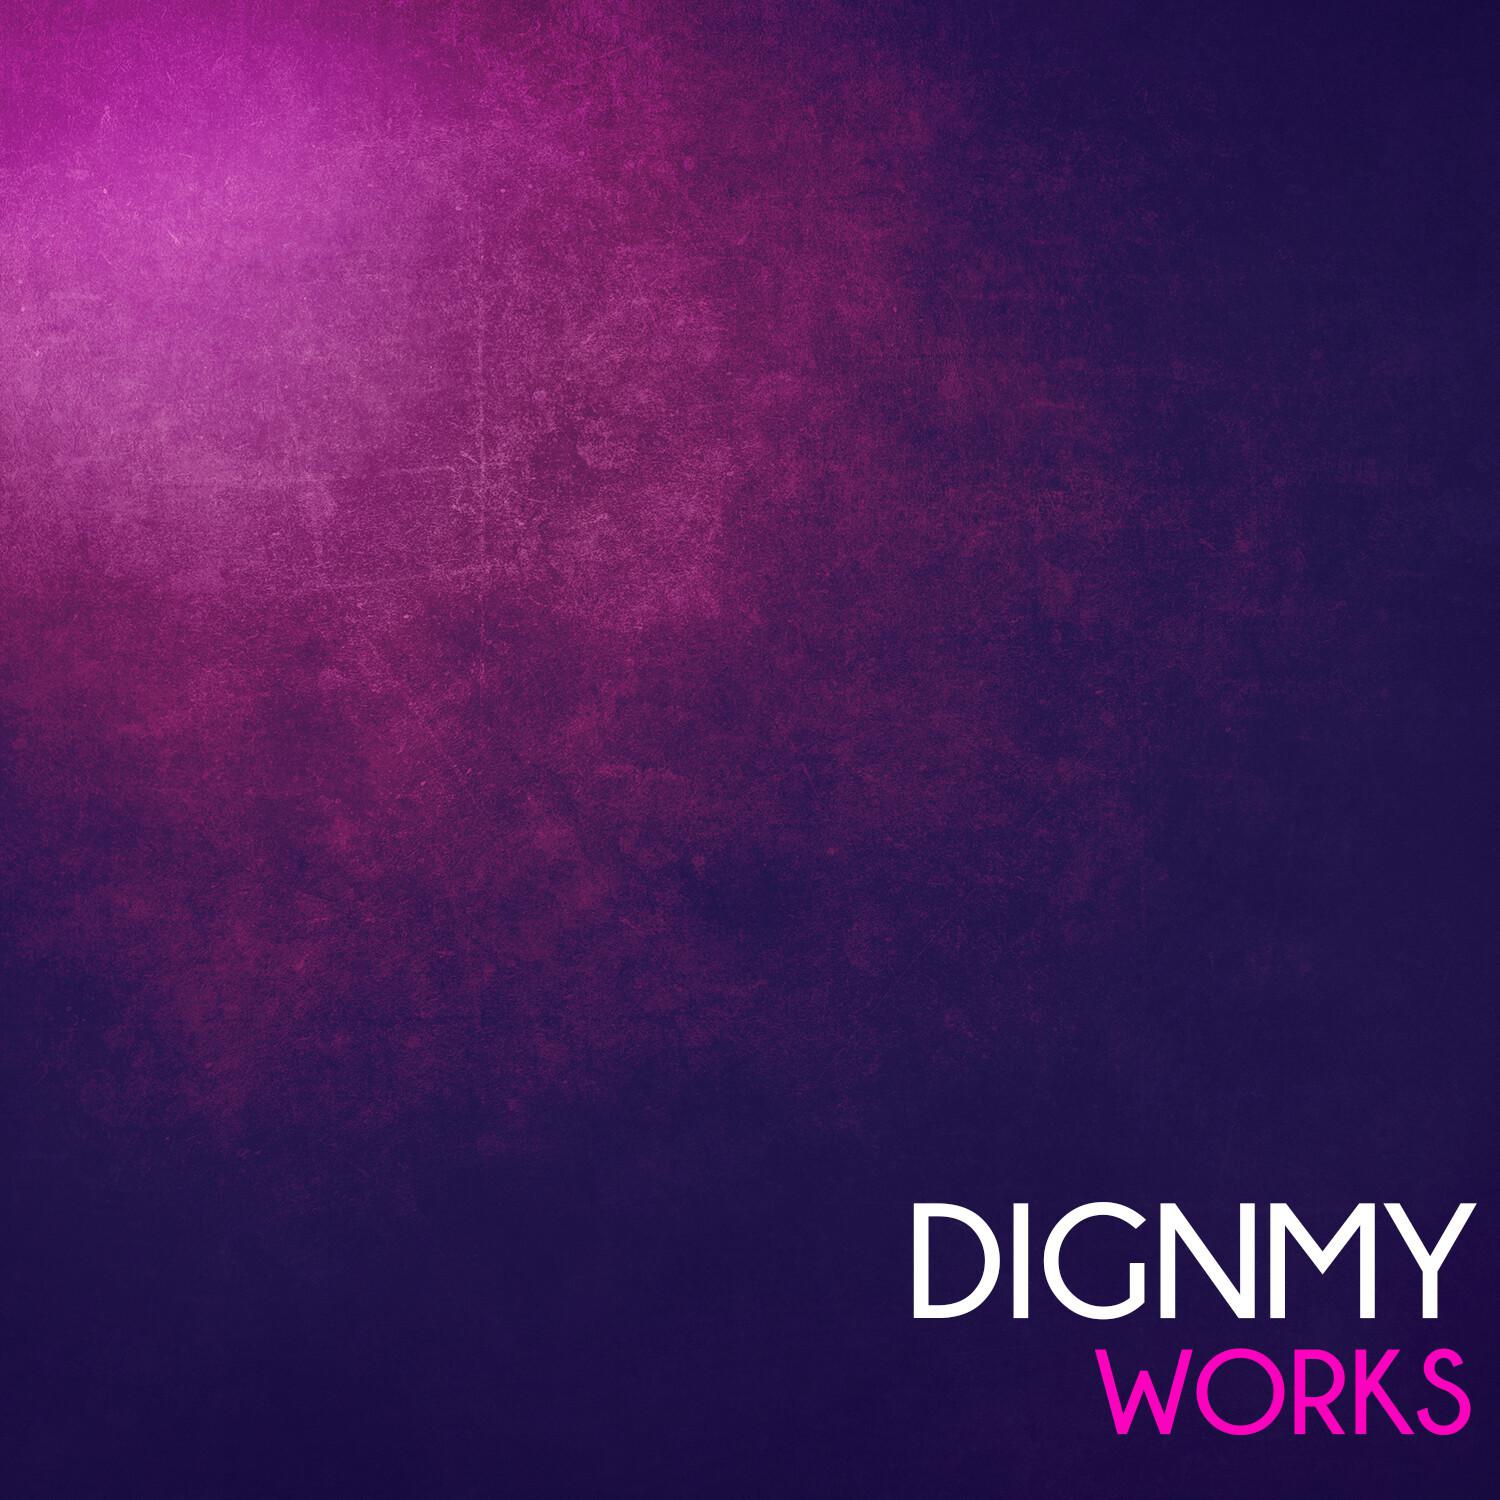 Dignmy Works